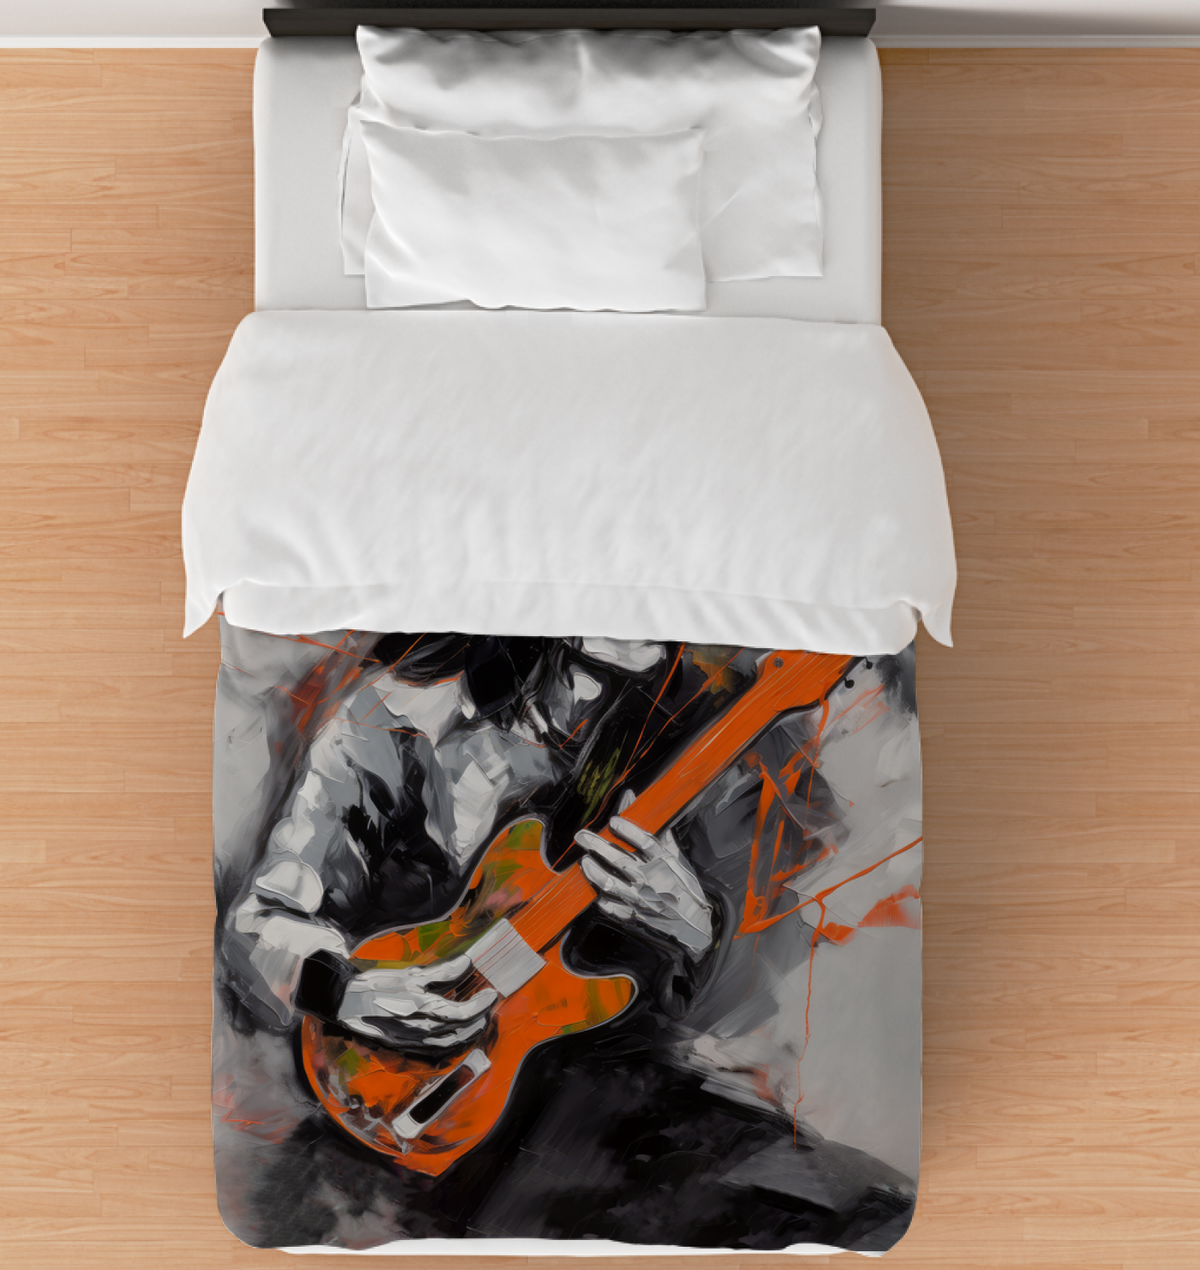 Subtle Horizon Comforter on Bed.